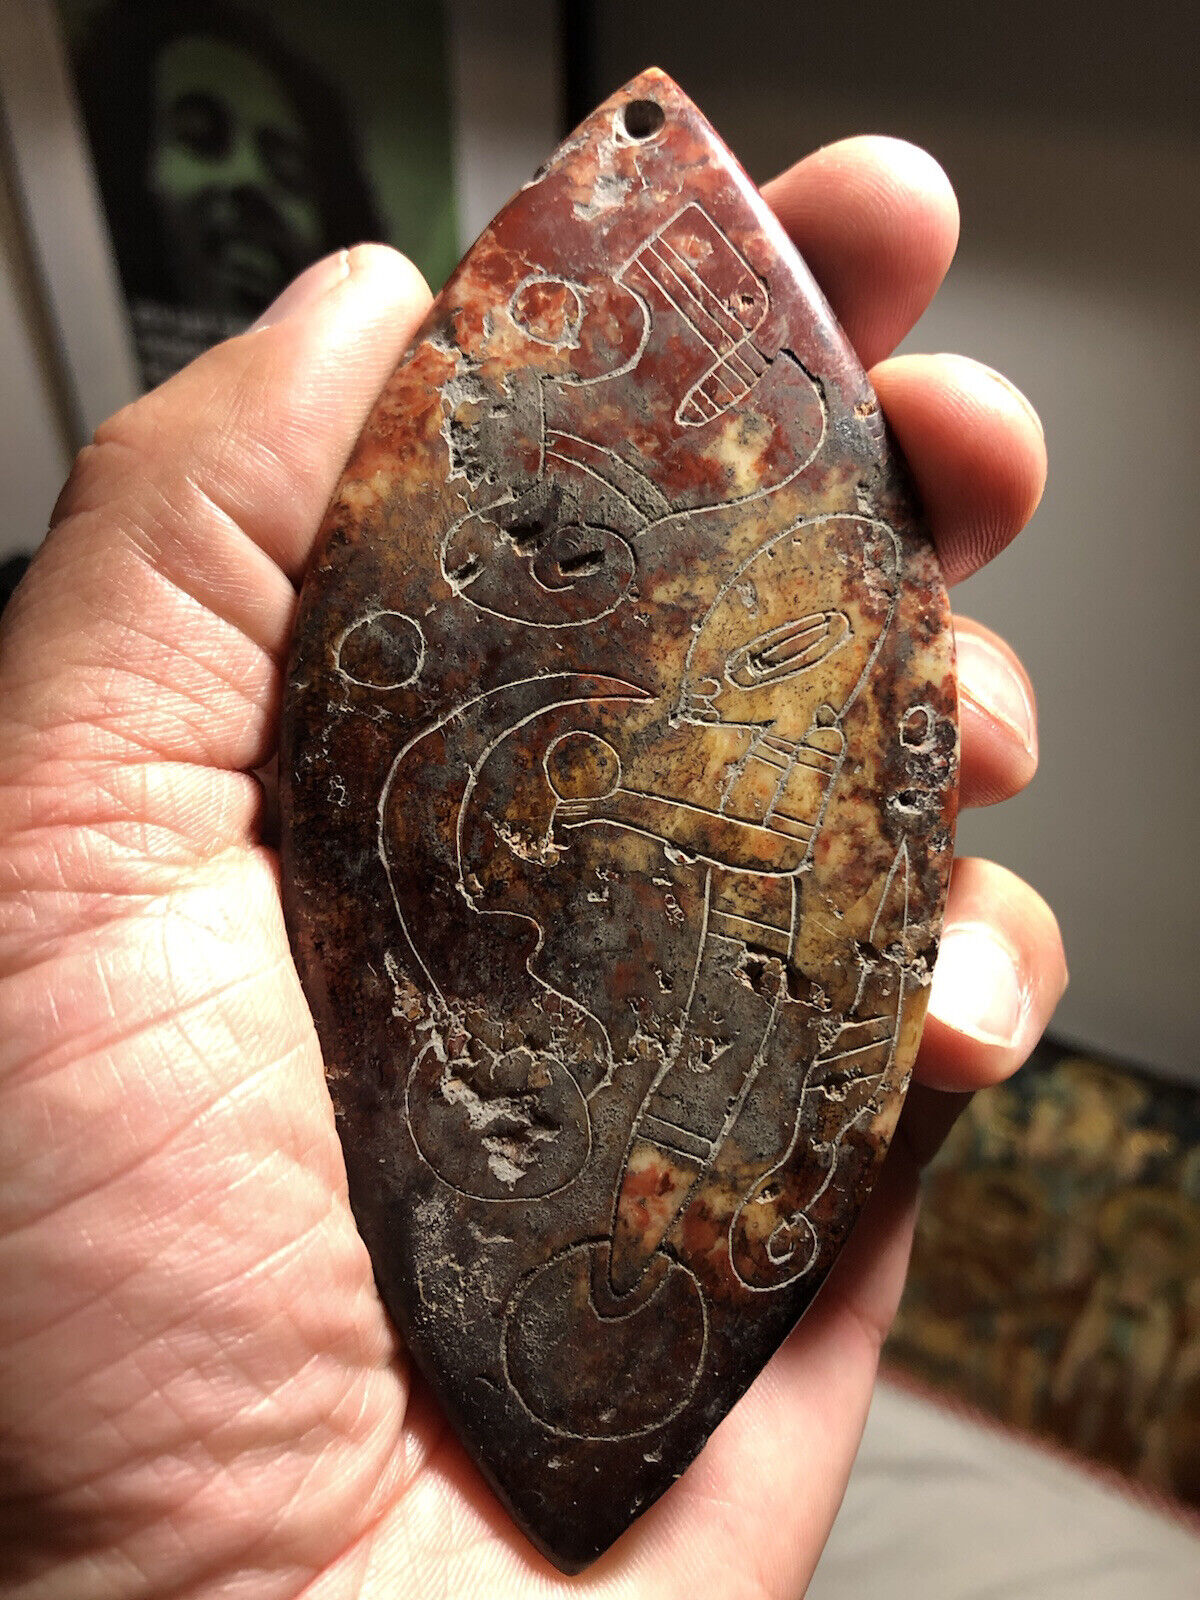 Ojuelos de Jalisco Alien Carved Stone.Authentic Aztlan Artifact 